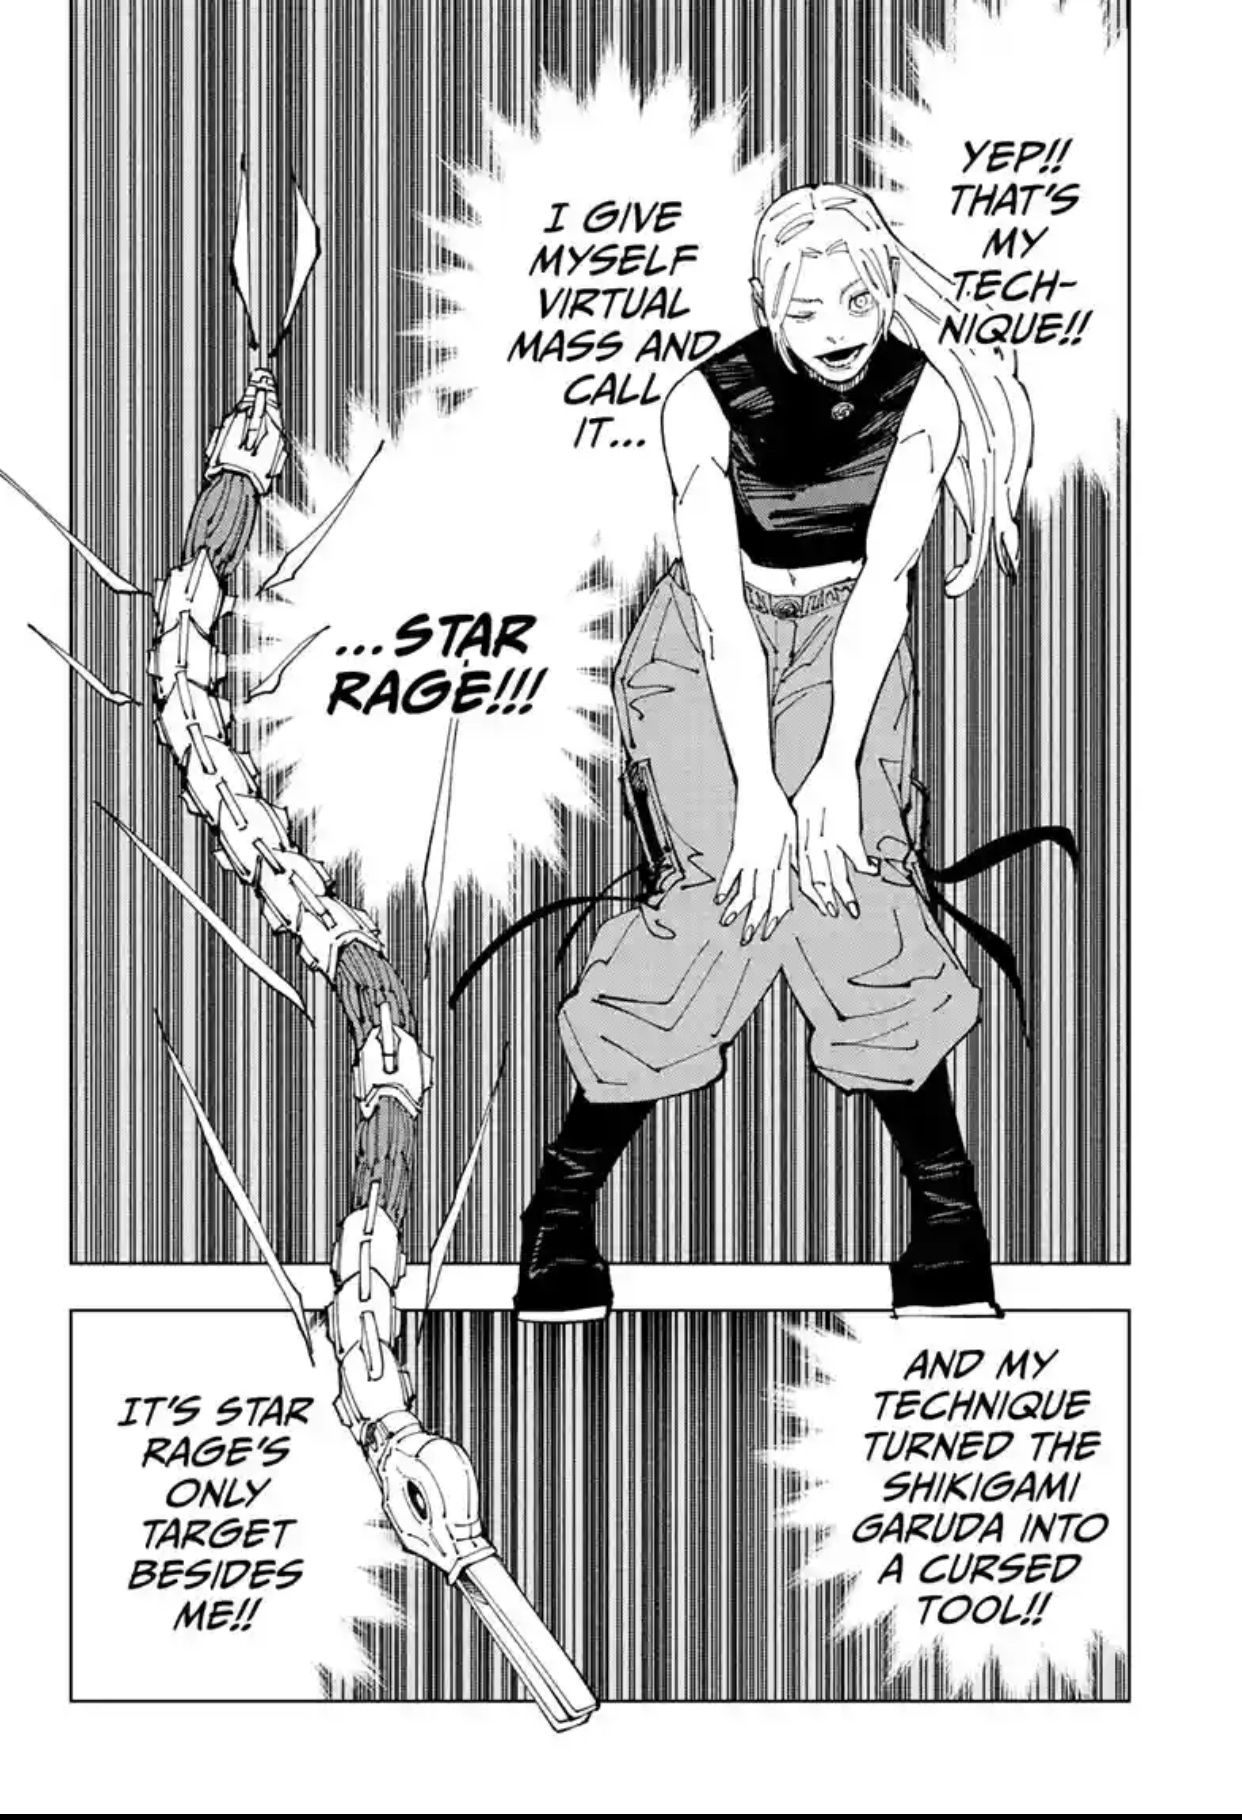 Yuki explaining Star Rage and Garuda shikigami 